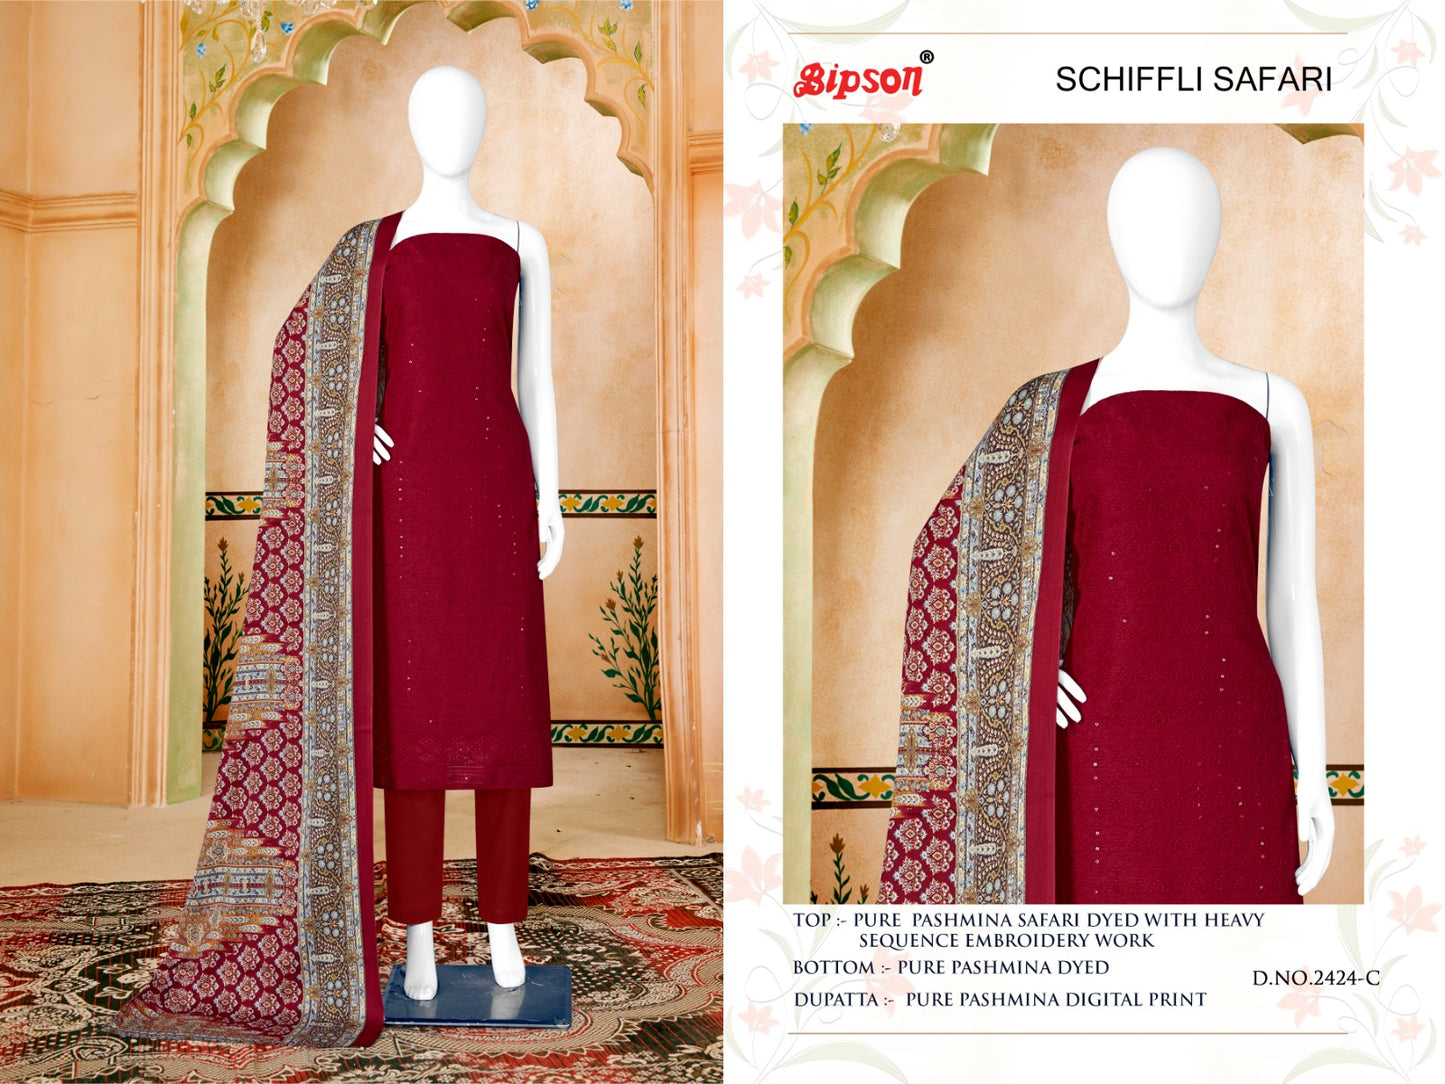 Schiffli Safari-2424 Bipson Prints Pashmina Suits